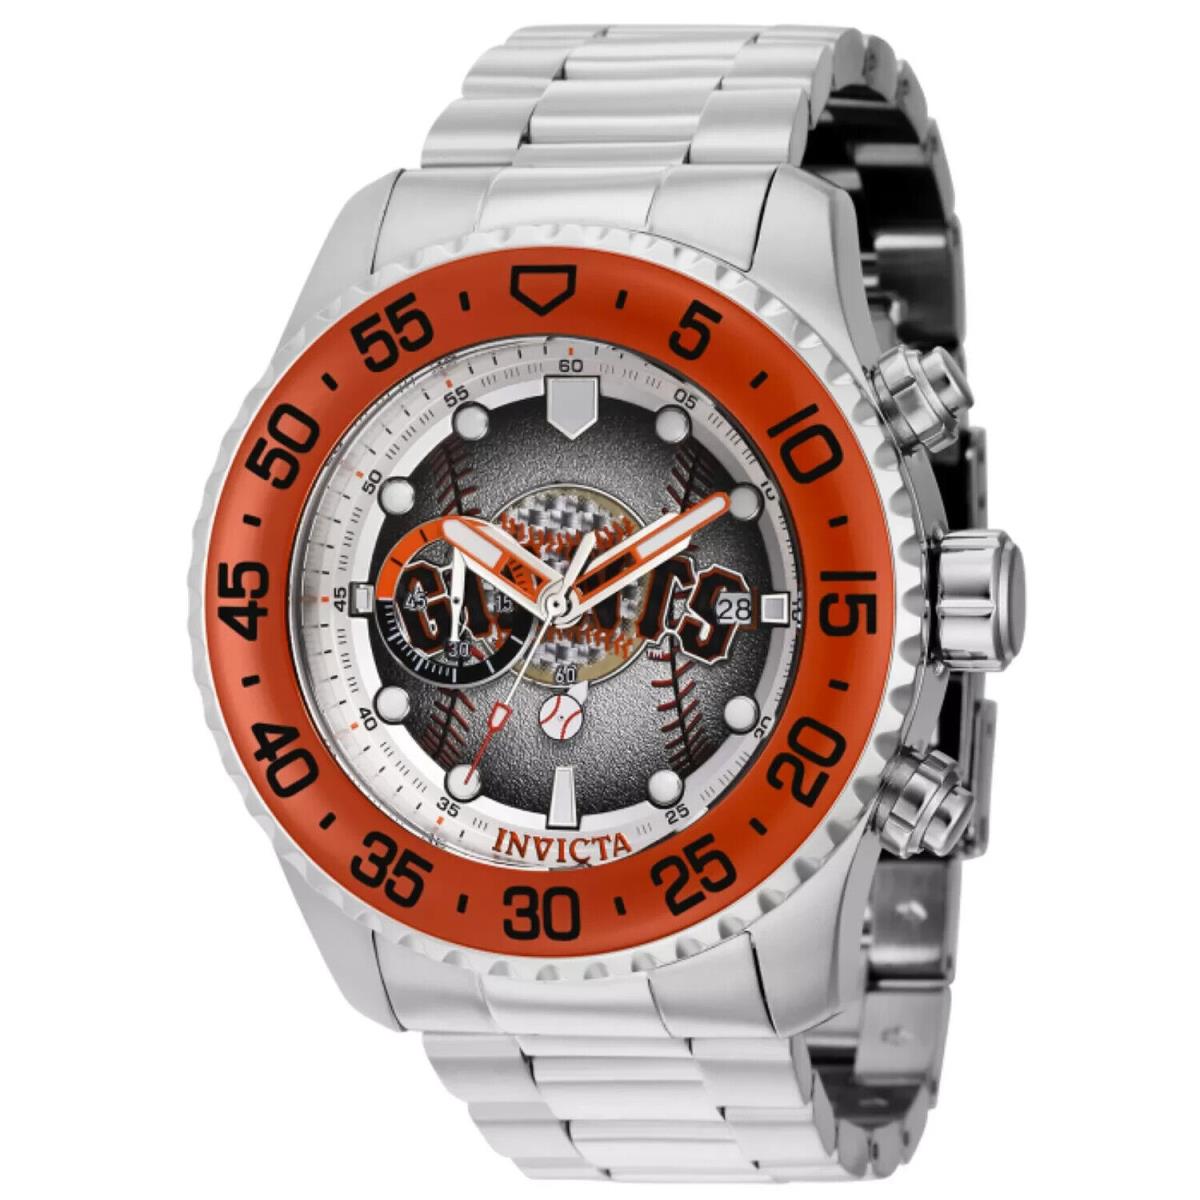 Pro Diver Invicta Mlb San Francisco Giants 40mm Chrono SS Quartz Watch 42775 - Dial: Black, Gray, Multicolor, Orange, Band: Silver, Bezel: Orange